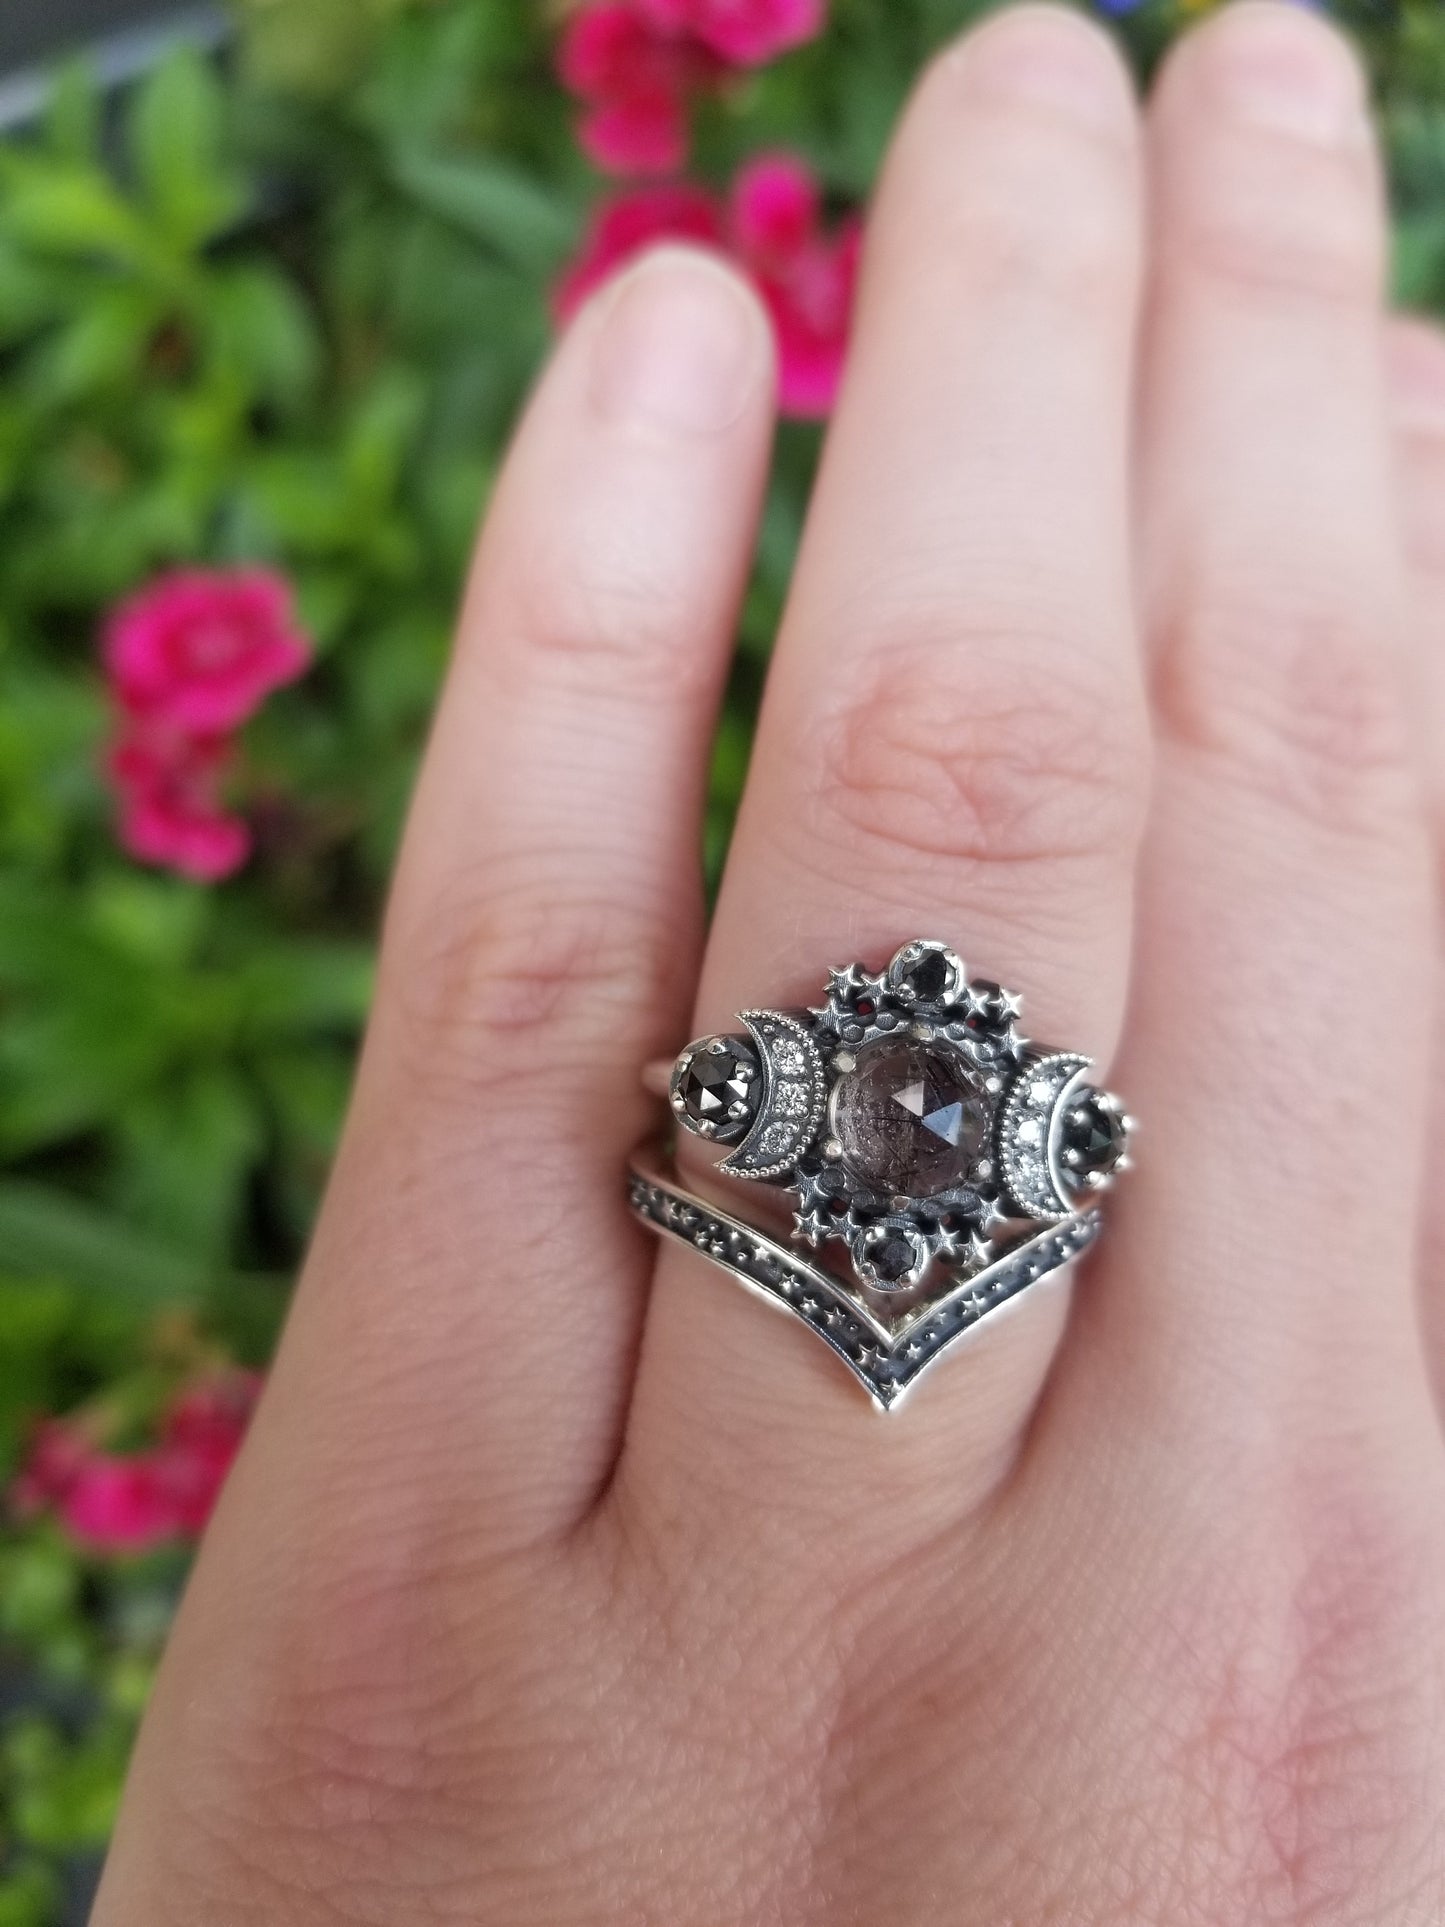 Rose Cut Black Rutile Quartz Cosmos Moon Engagement Ring Set - Sterling Silver with Black & White Diamonds